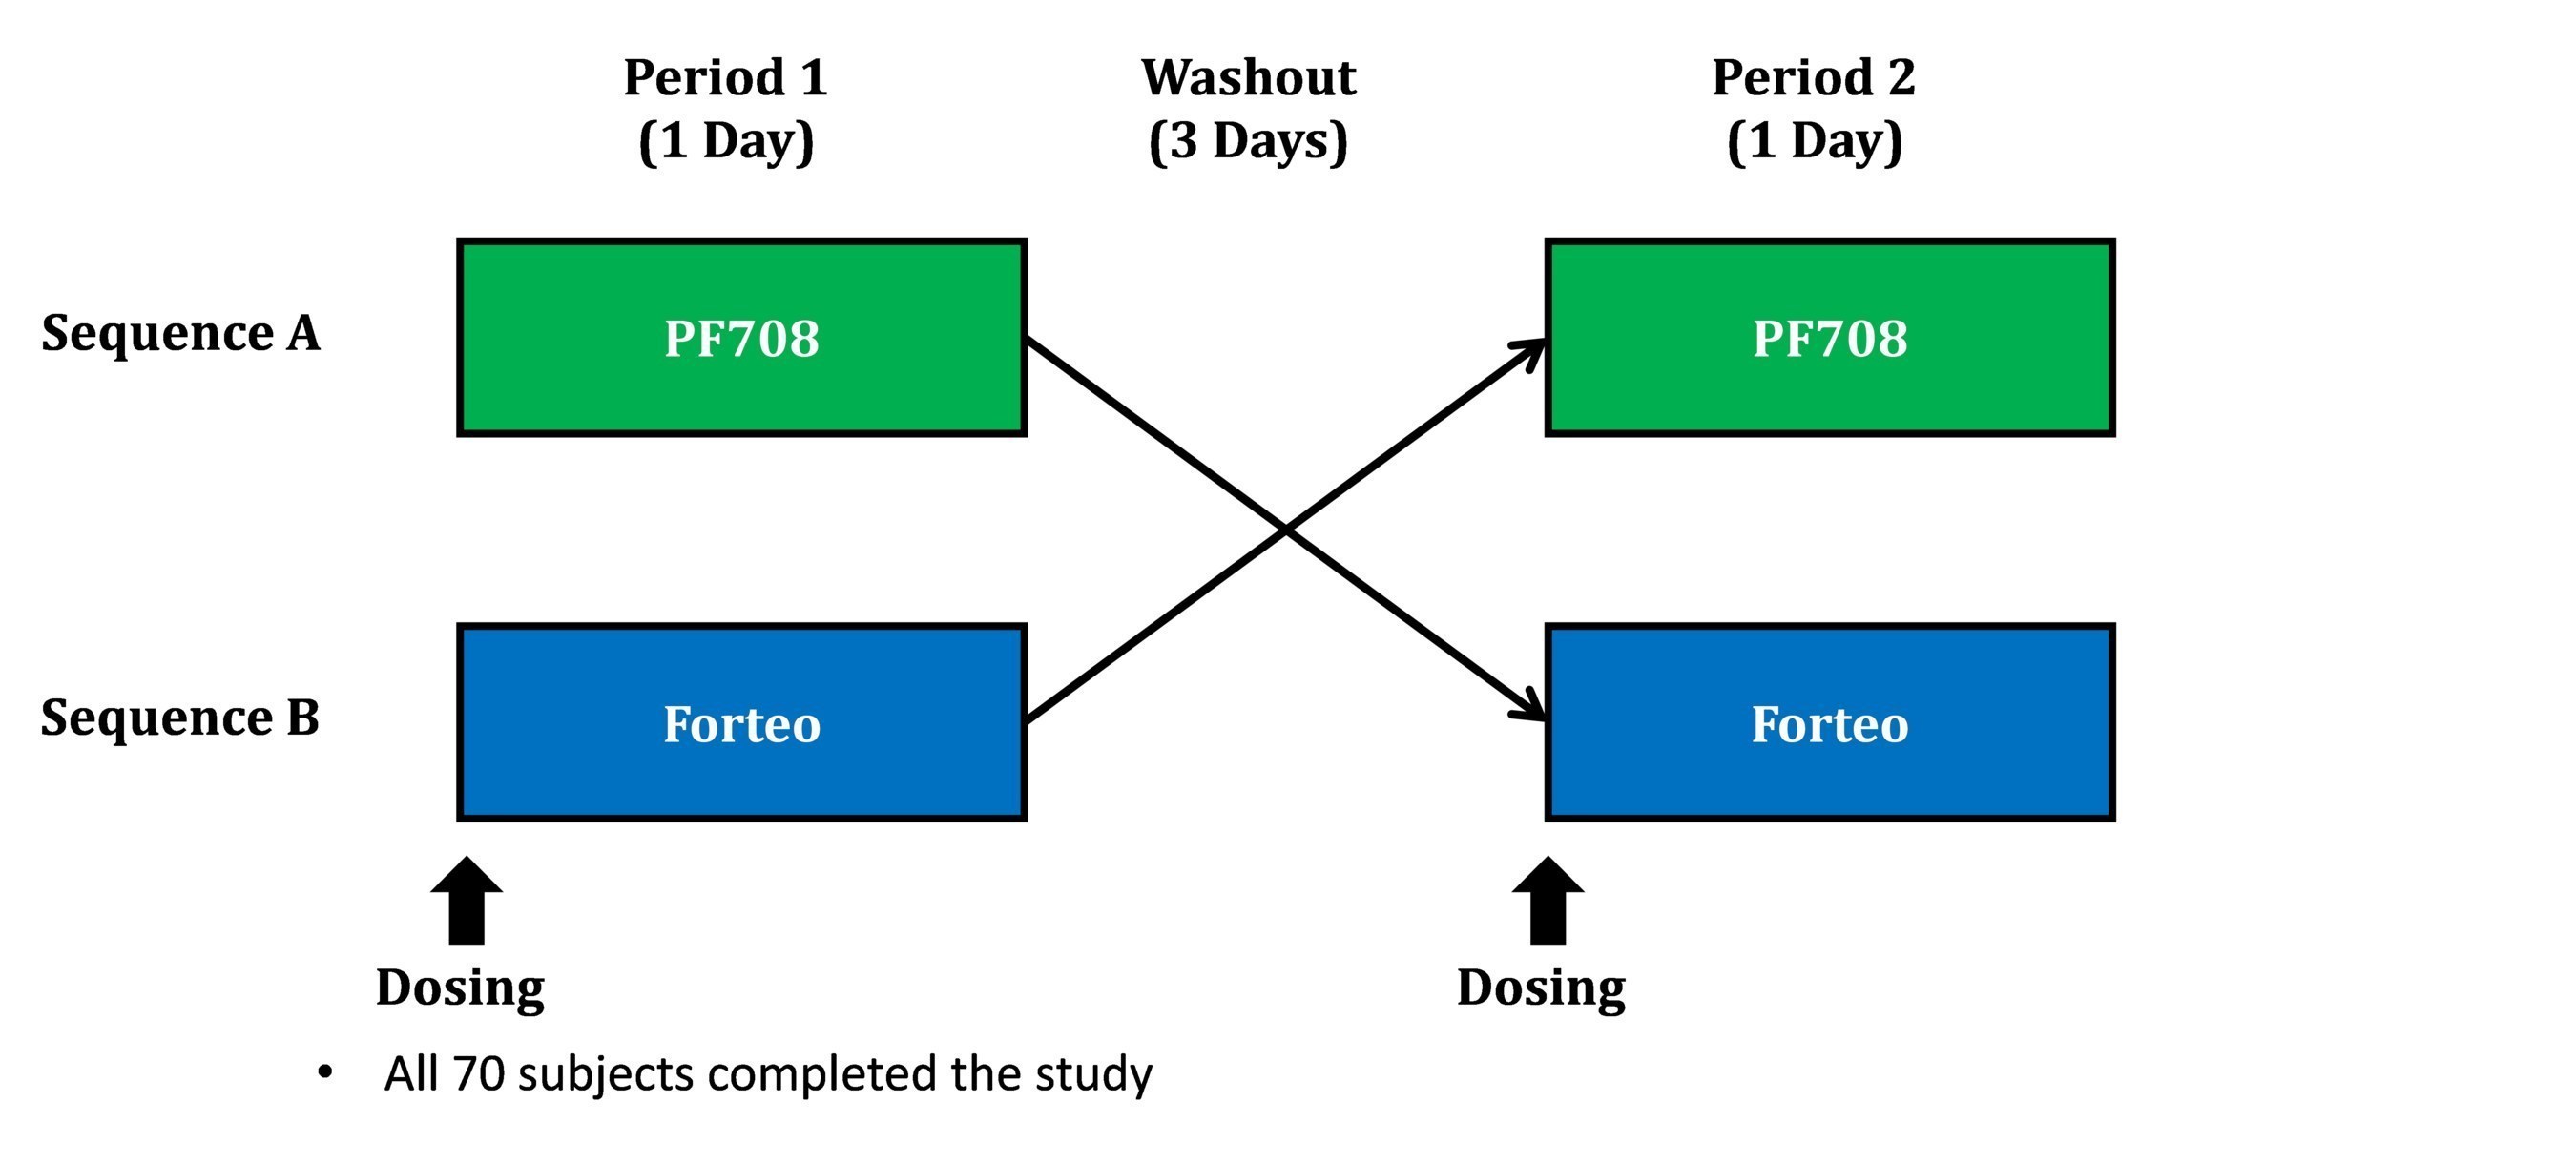 FIGURE 1: PF708 Bioequivalence Study Design